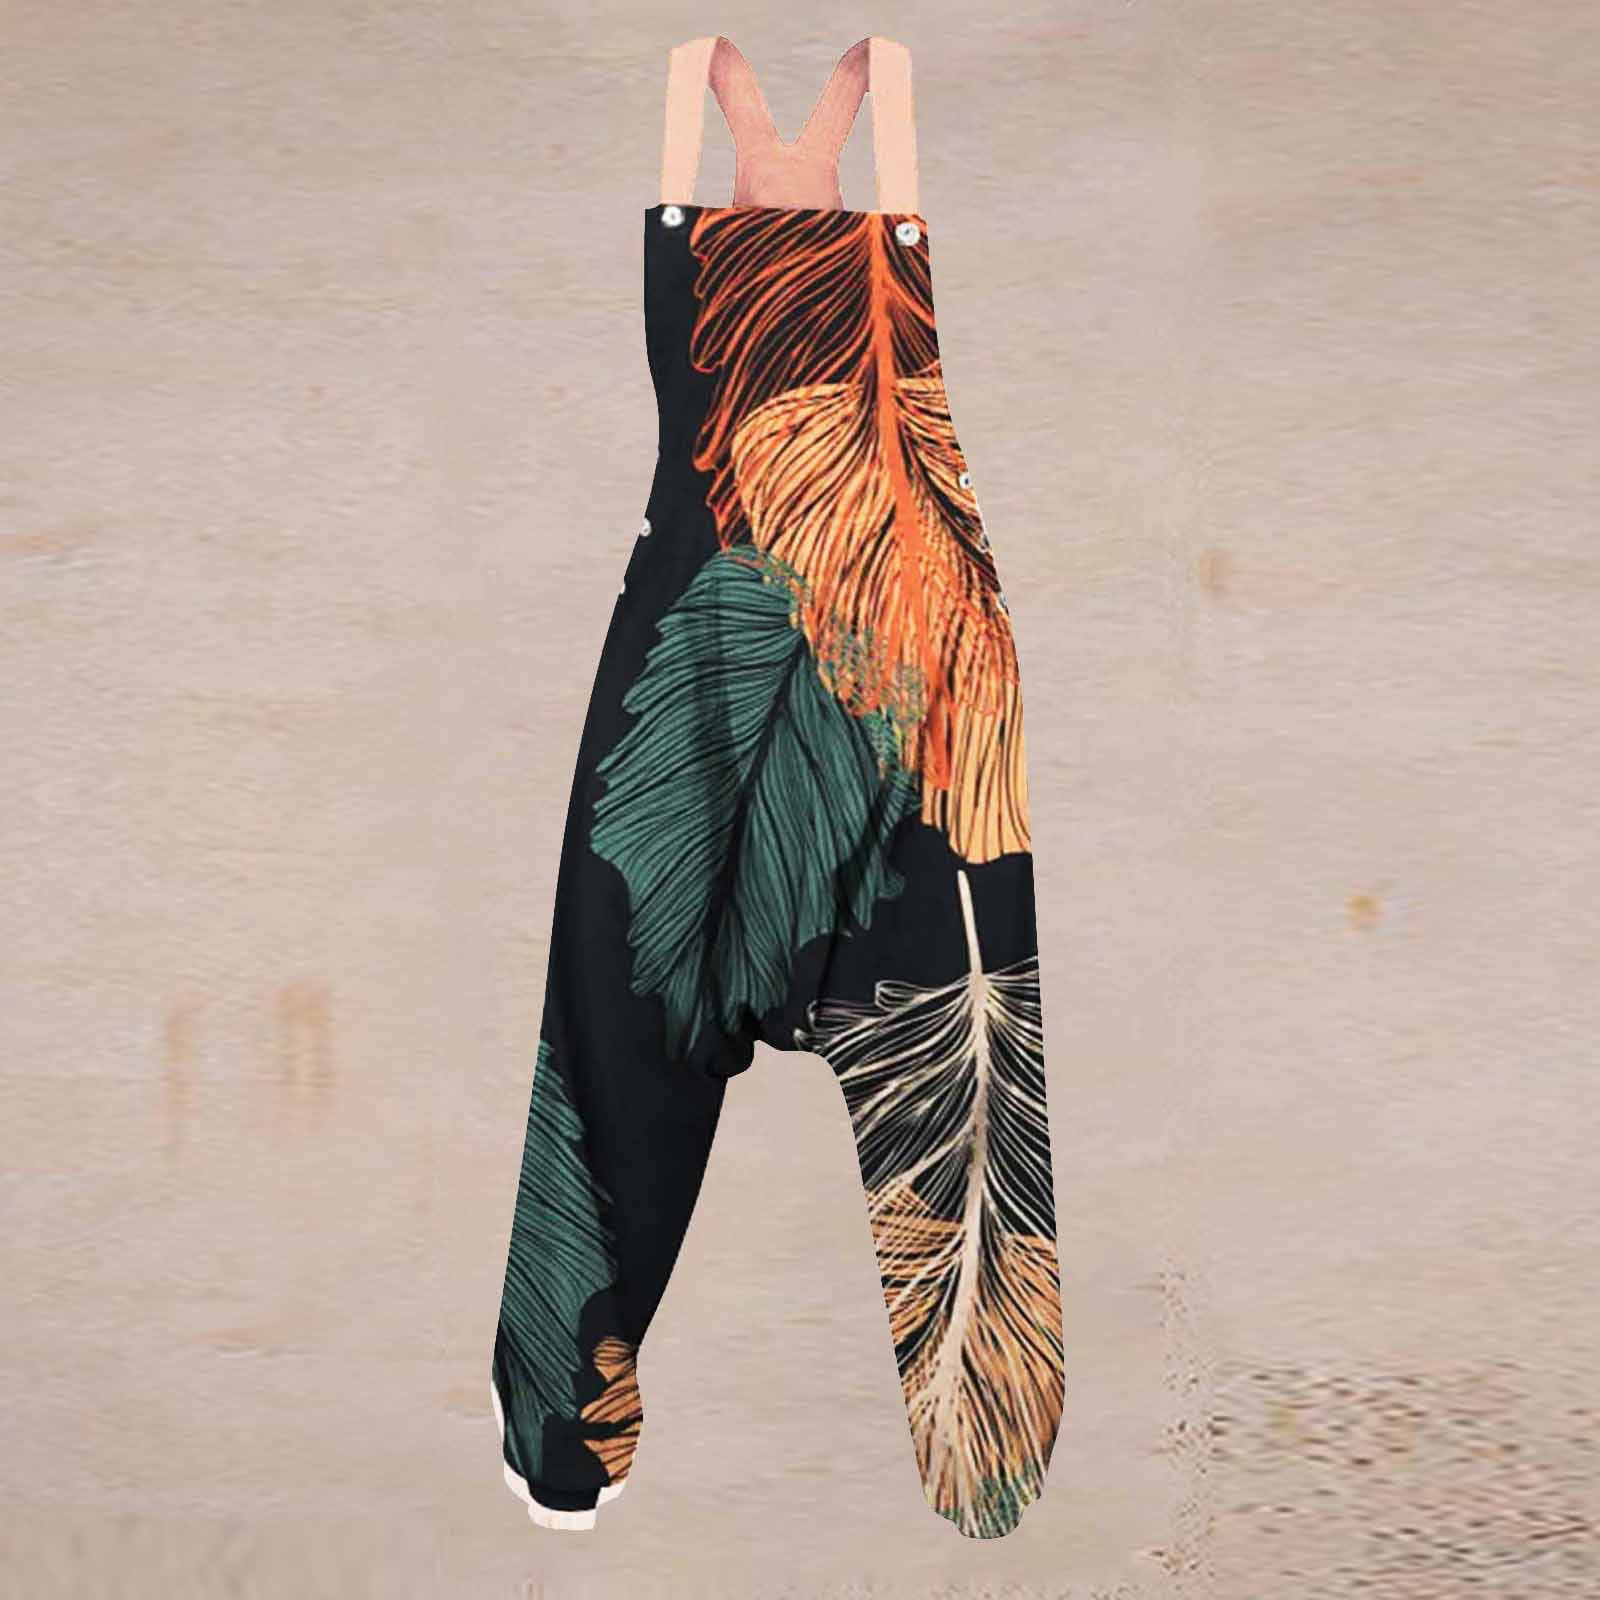 Sleeveless Jumpsuit for Women Vintage Summer Boho Racerback Spaghetti Straps Long Harem Pants Jumpsuit Rompers Overall 